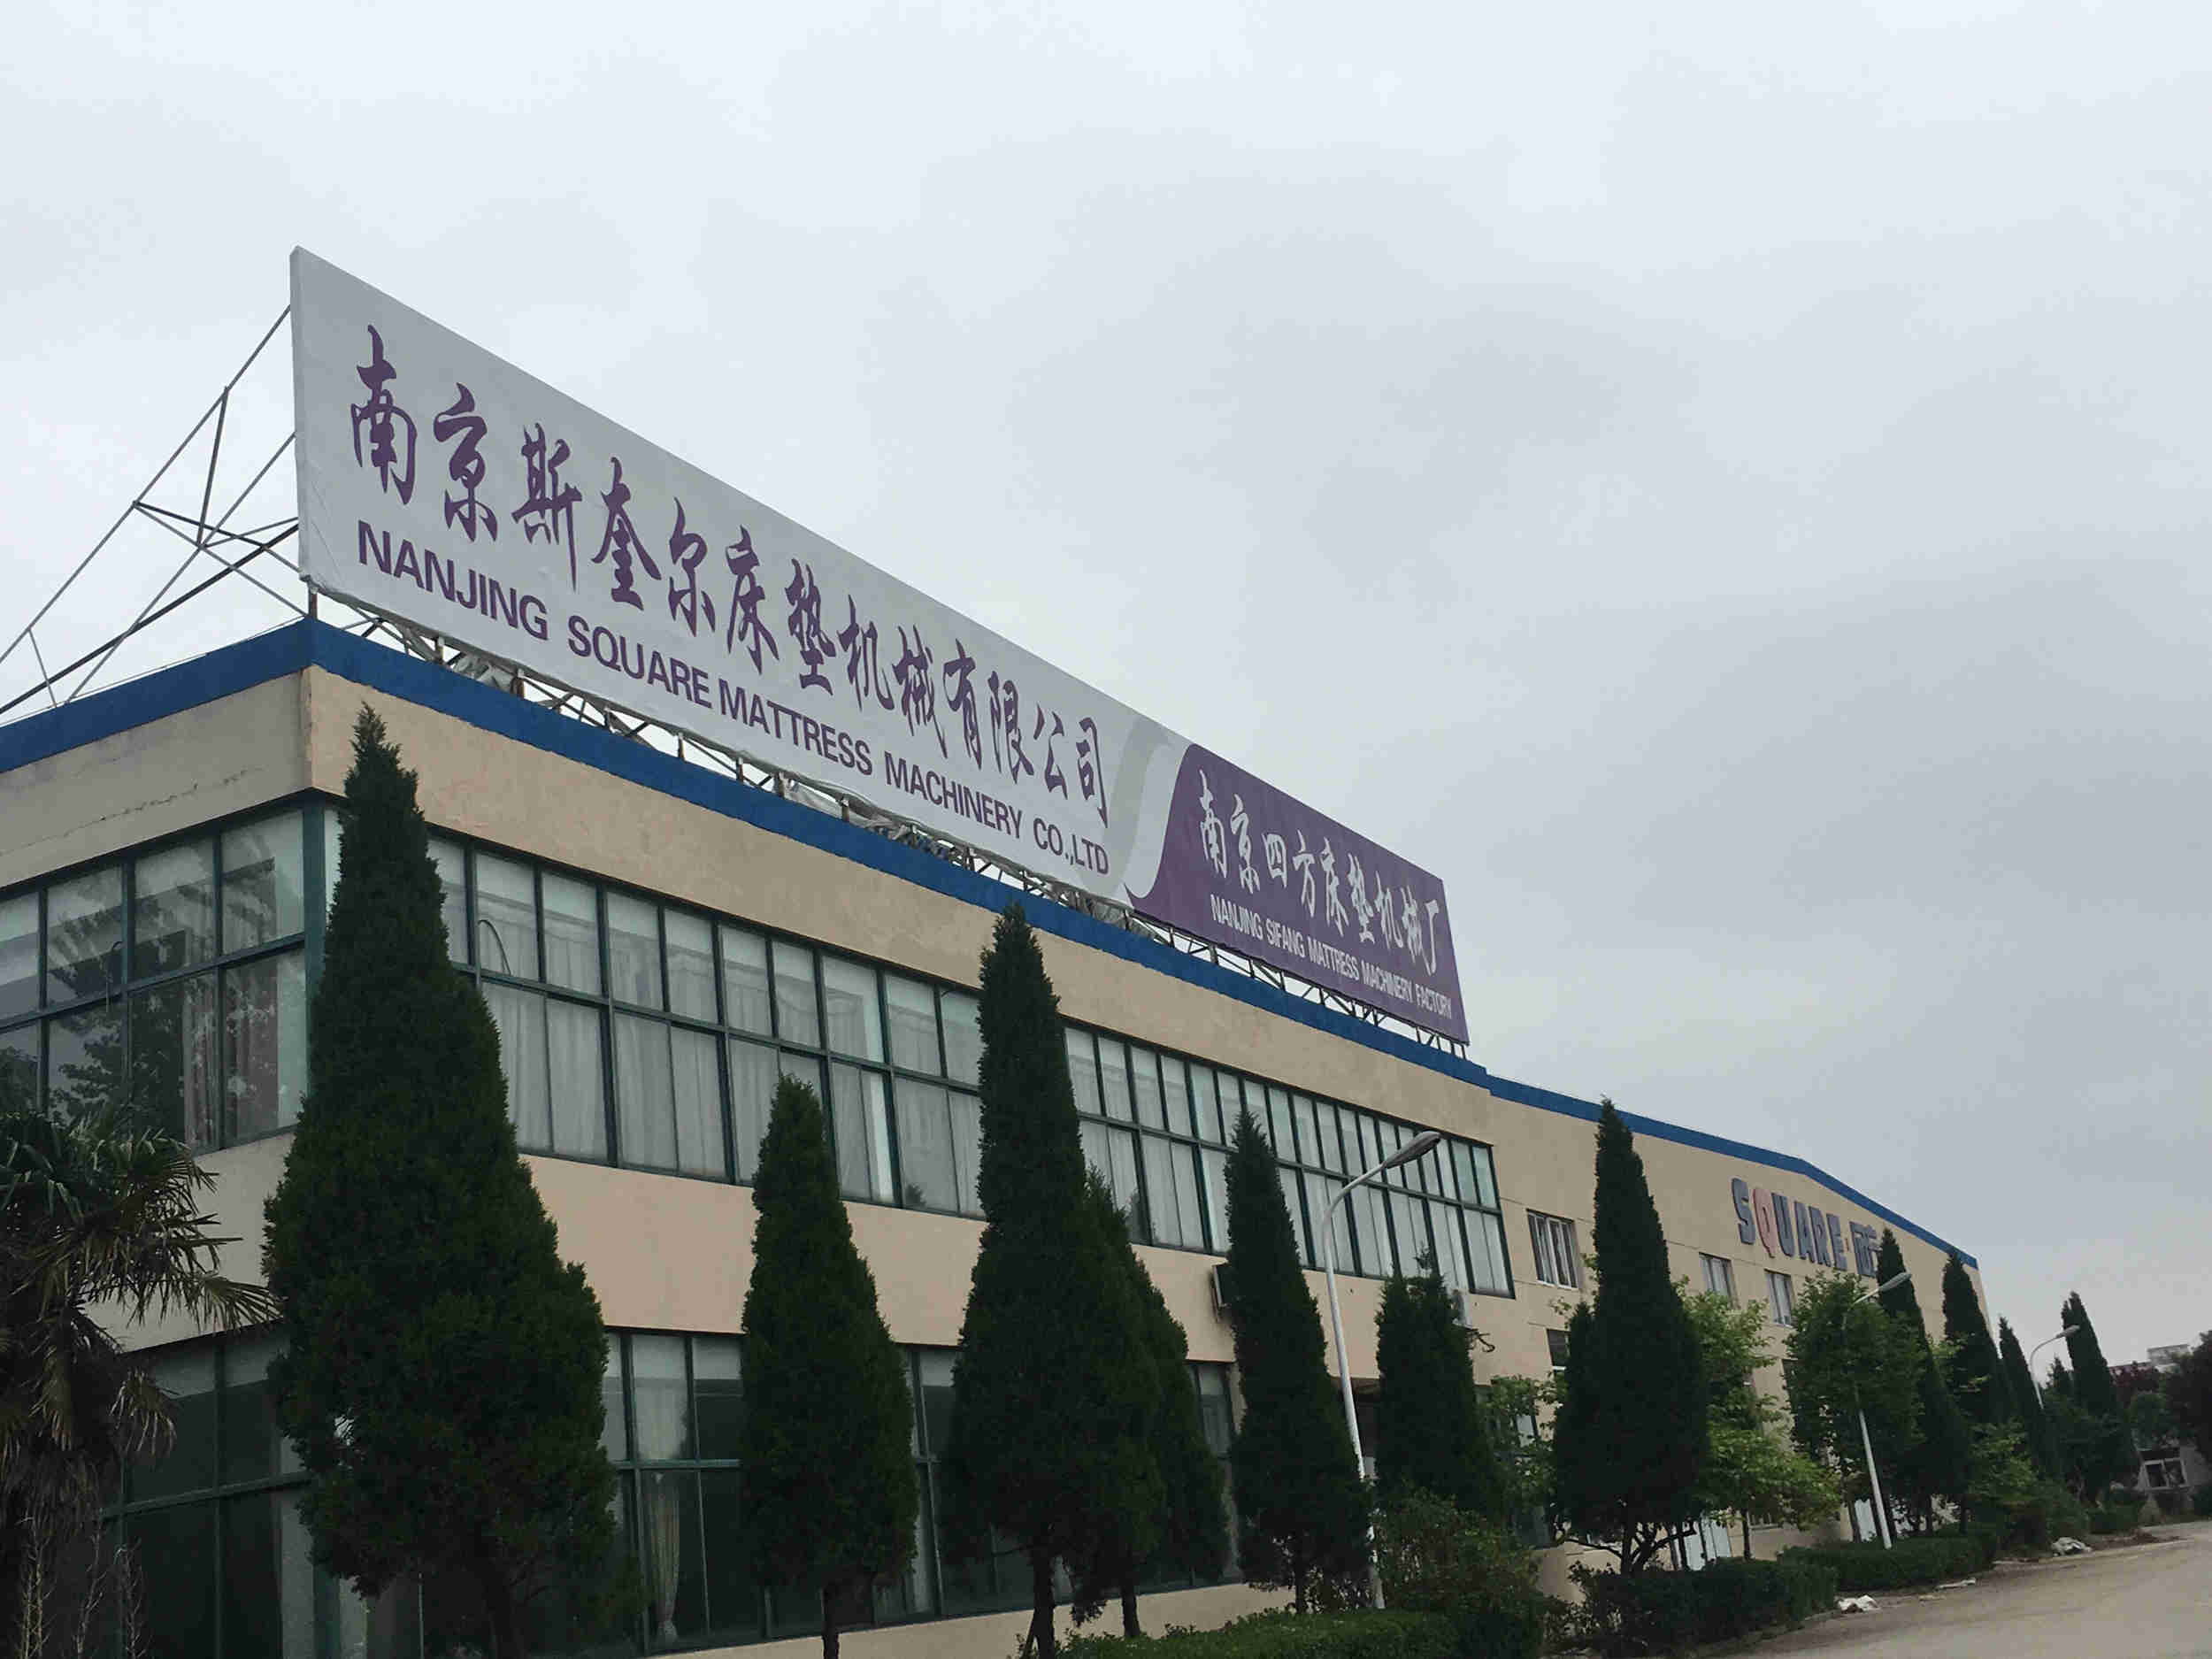 The development history of Nanjing Square Mattress Machinery Co., Ltd.